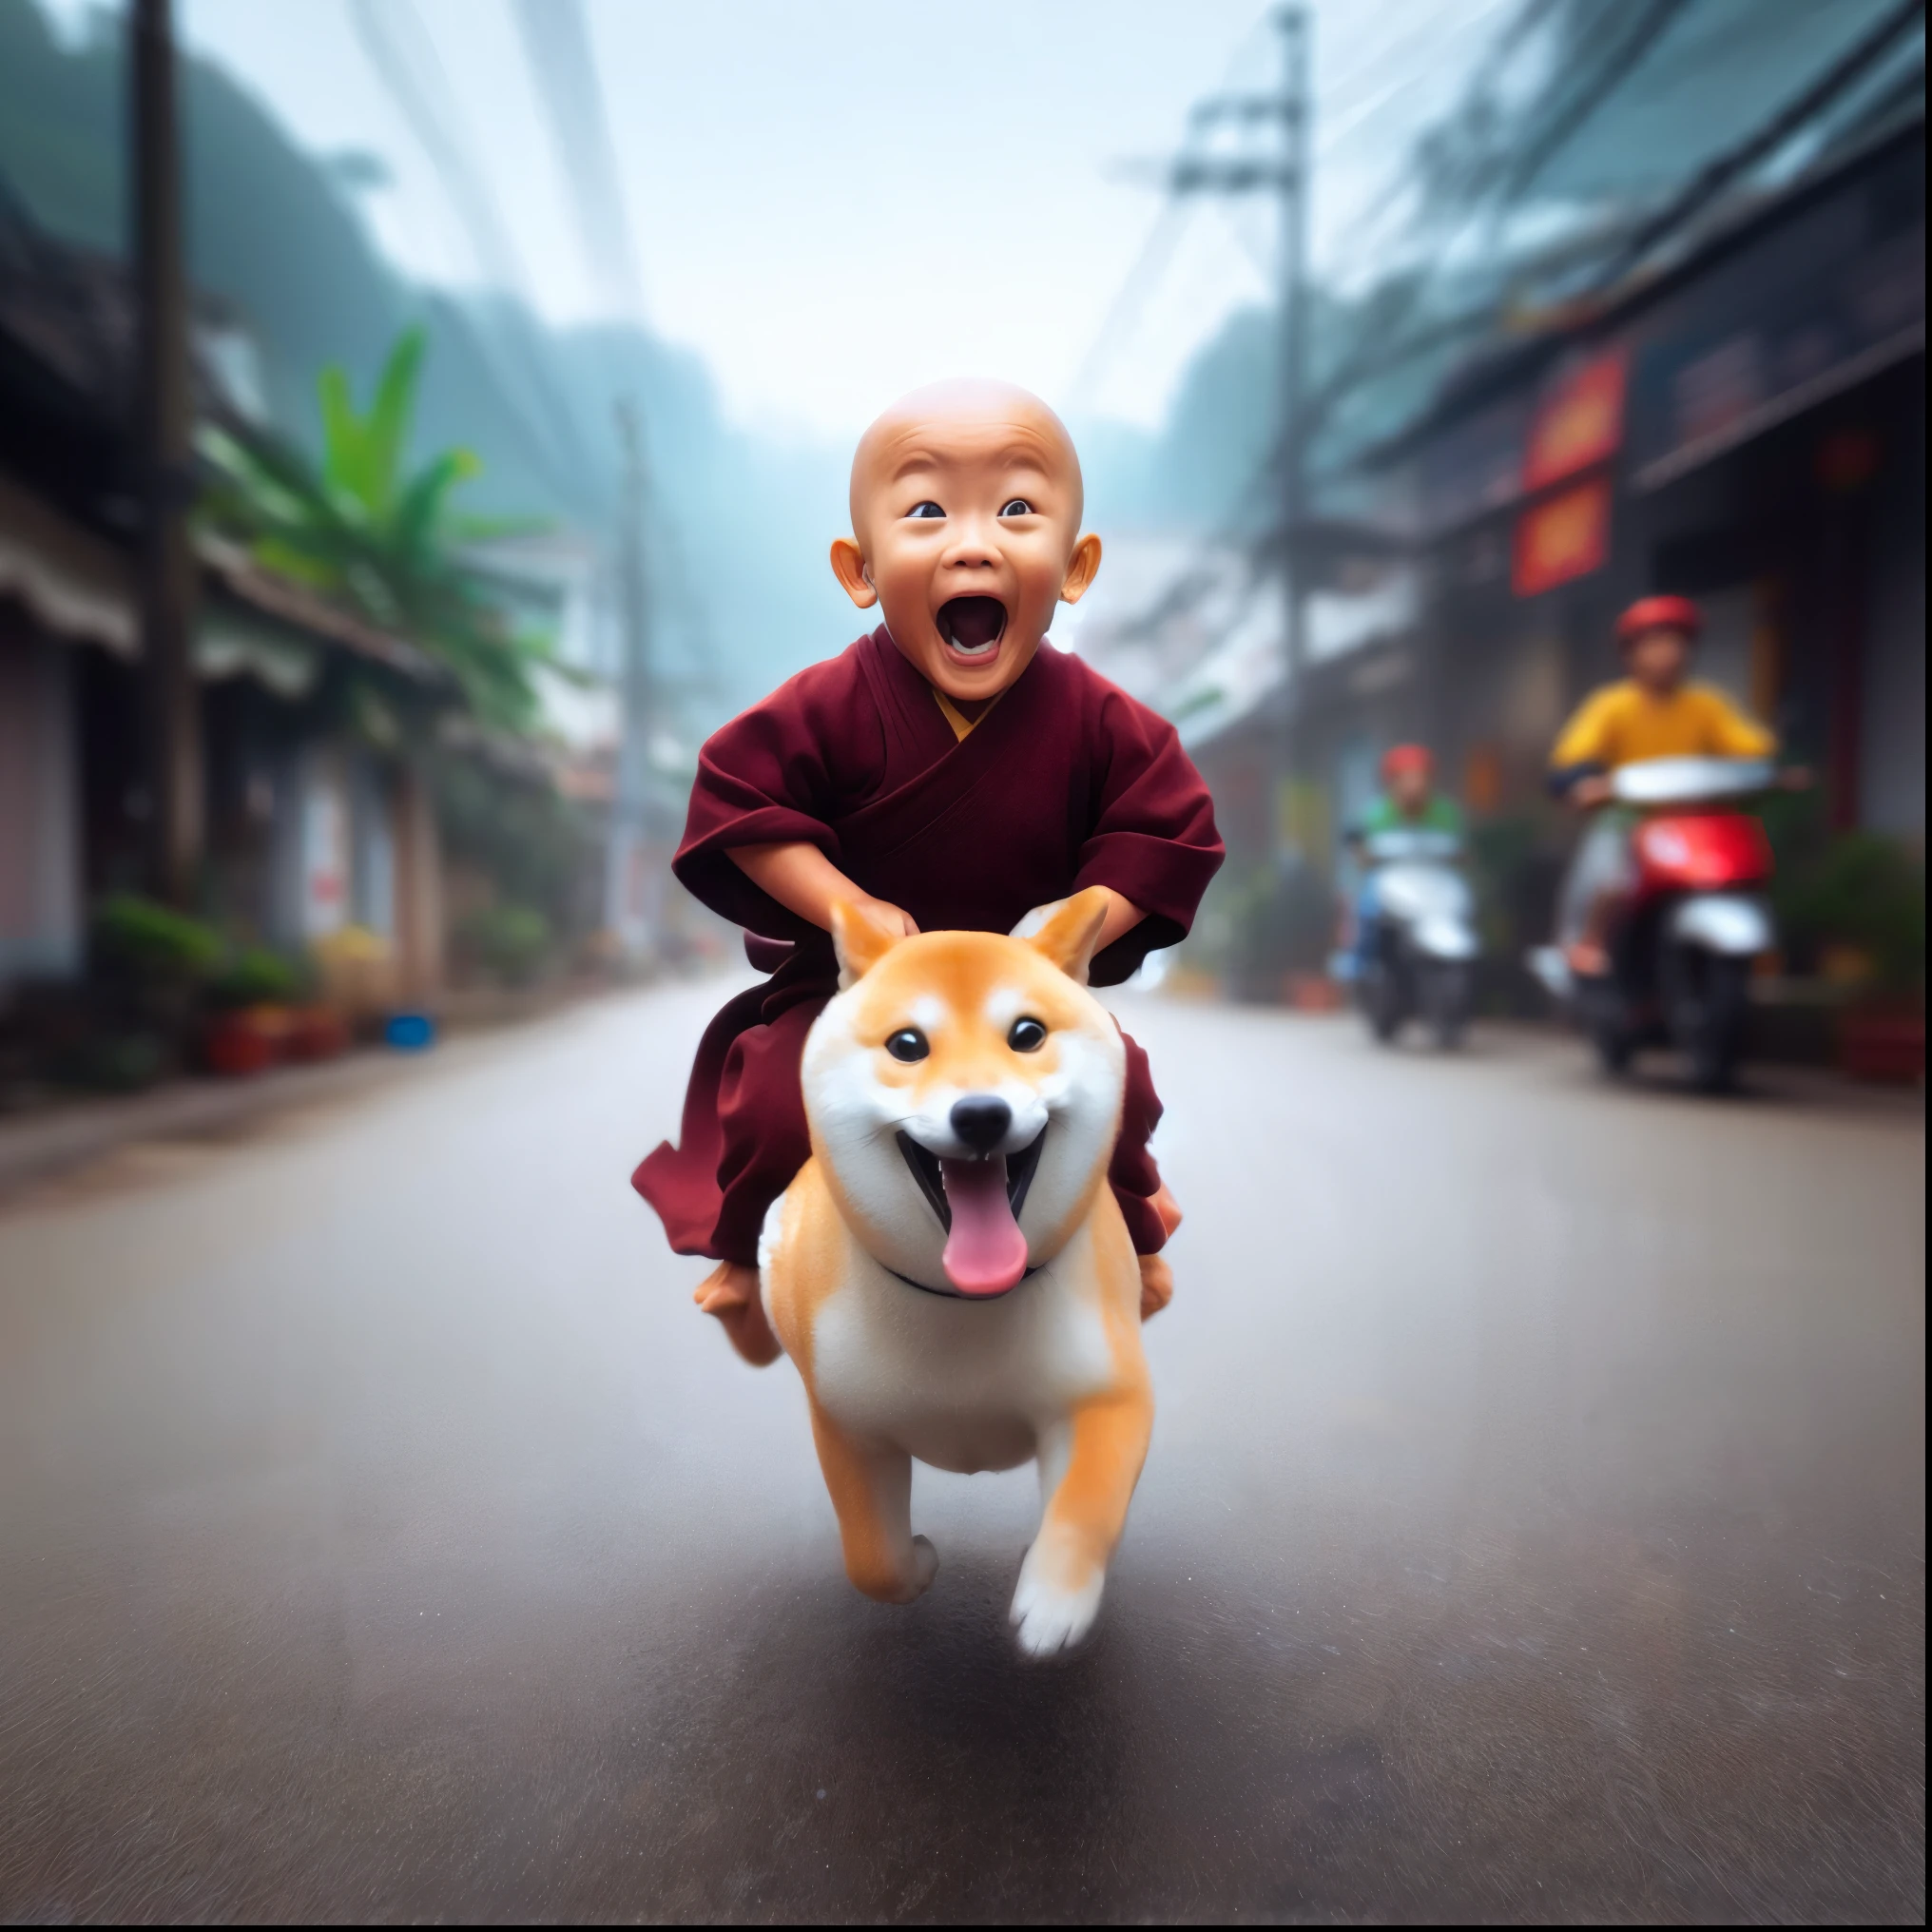 arafed image of a 僧 riding a dog on a street, 佛教徒, 狗为神, 2 1 st century 僧, 惊人的深度, 总督, 佛教, 惊人的, 和他的活泼小狗, guweiz 风格的艺术品, 可爱的数字绘画, 僧, 他很高兴, 纯粹的喜悦, 灵感源自 Shiba Kōkan